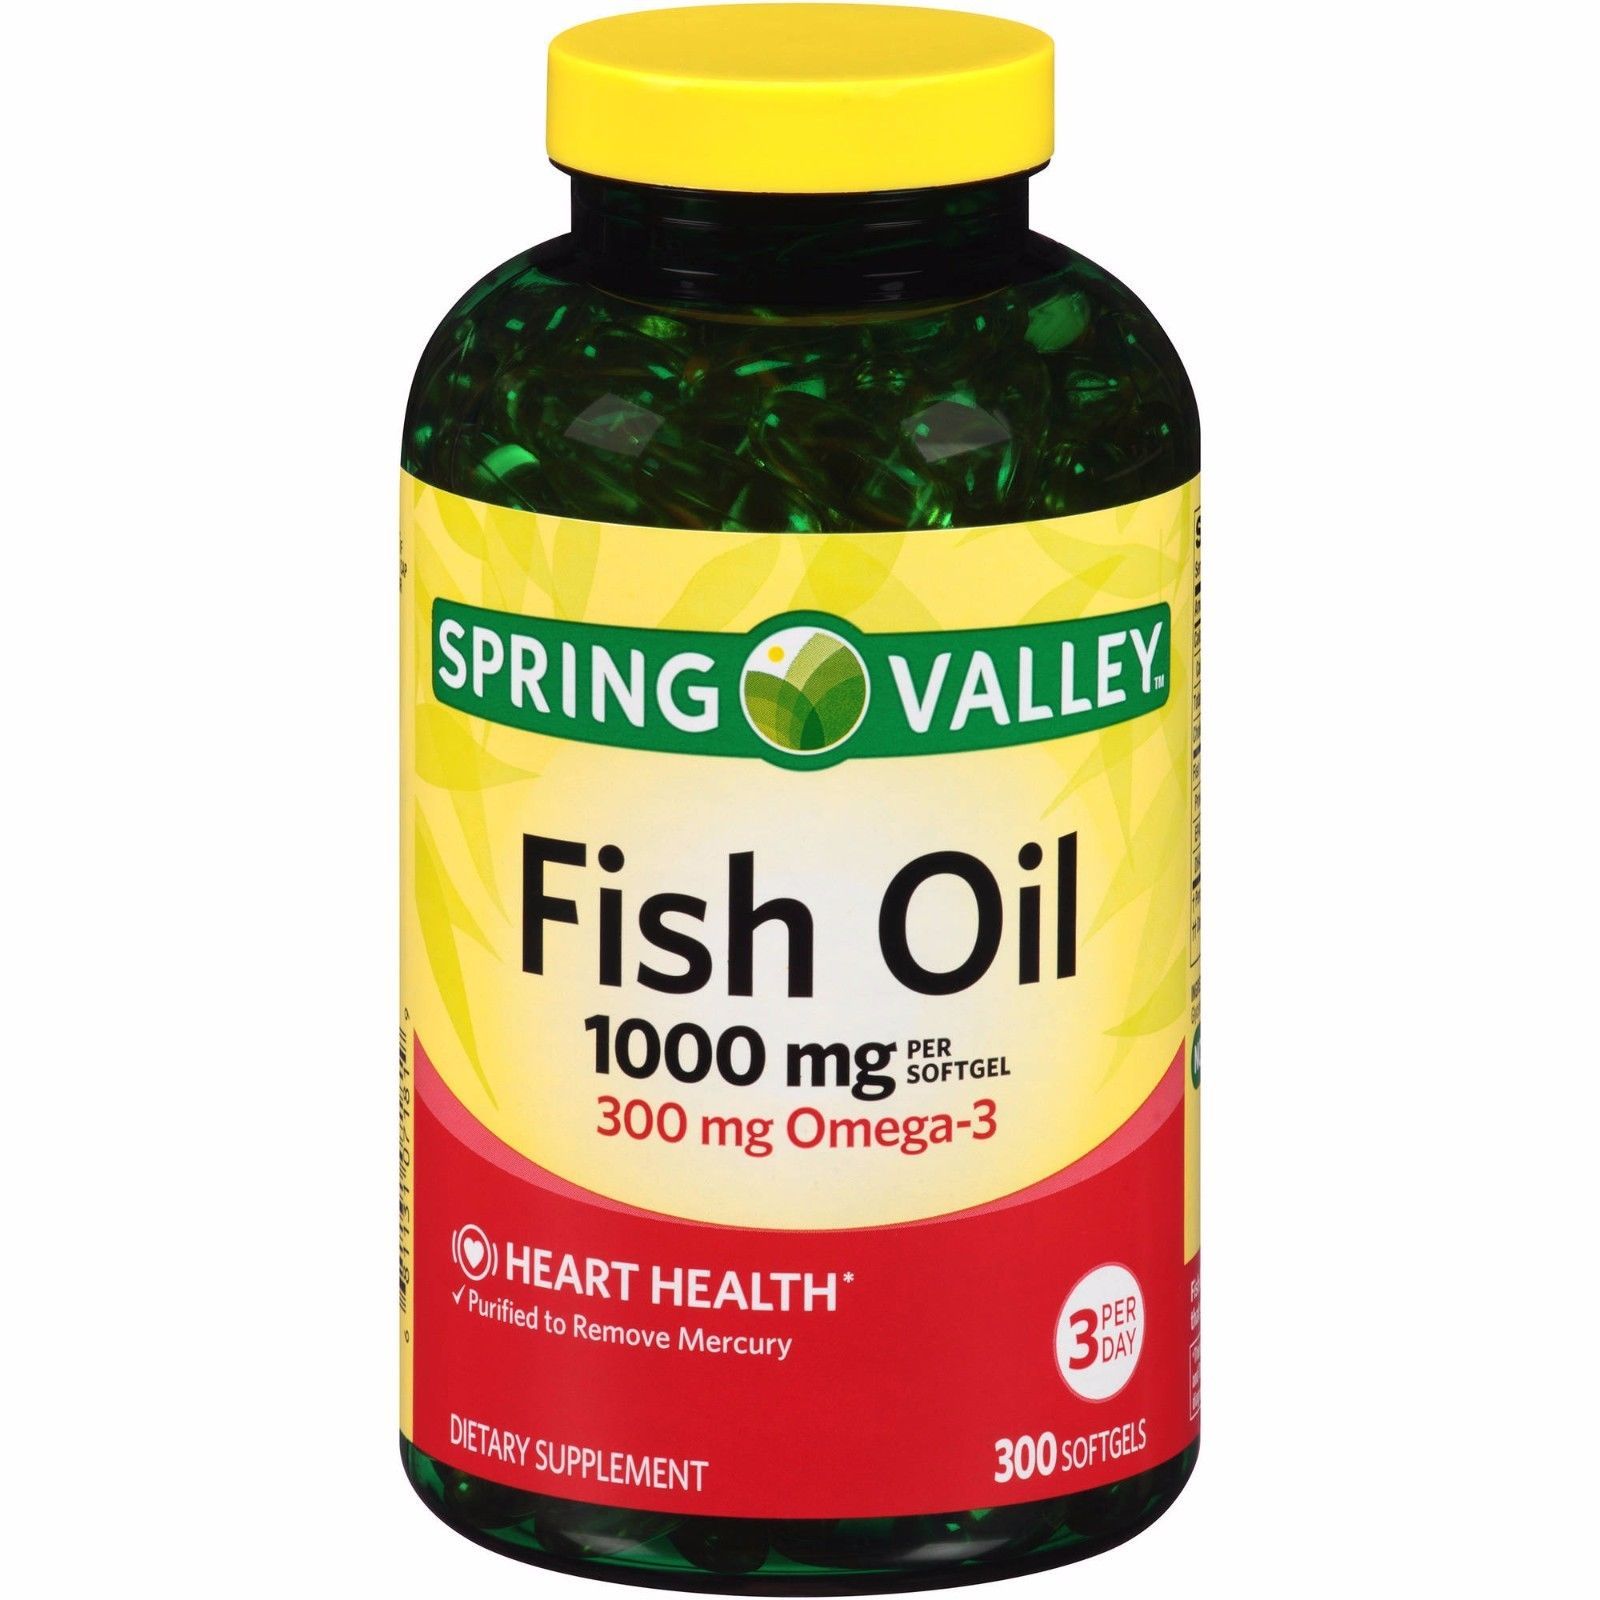 Spring Valley Fish Oil - BAHIA HAHA